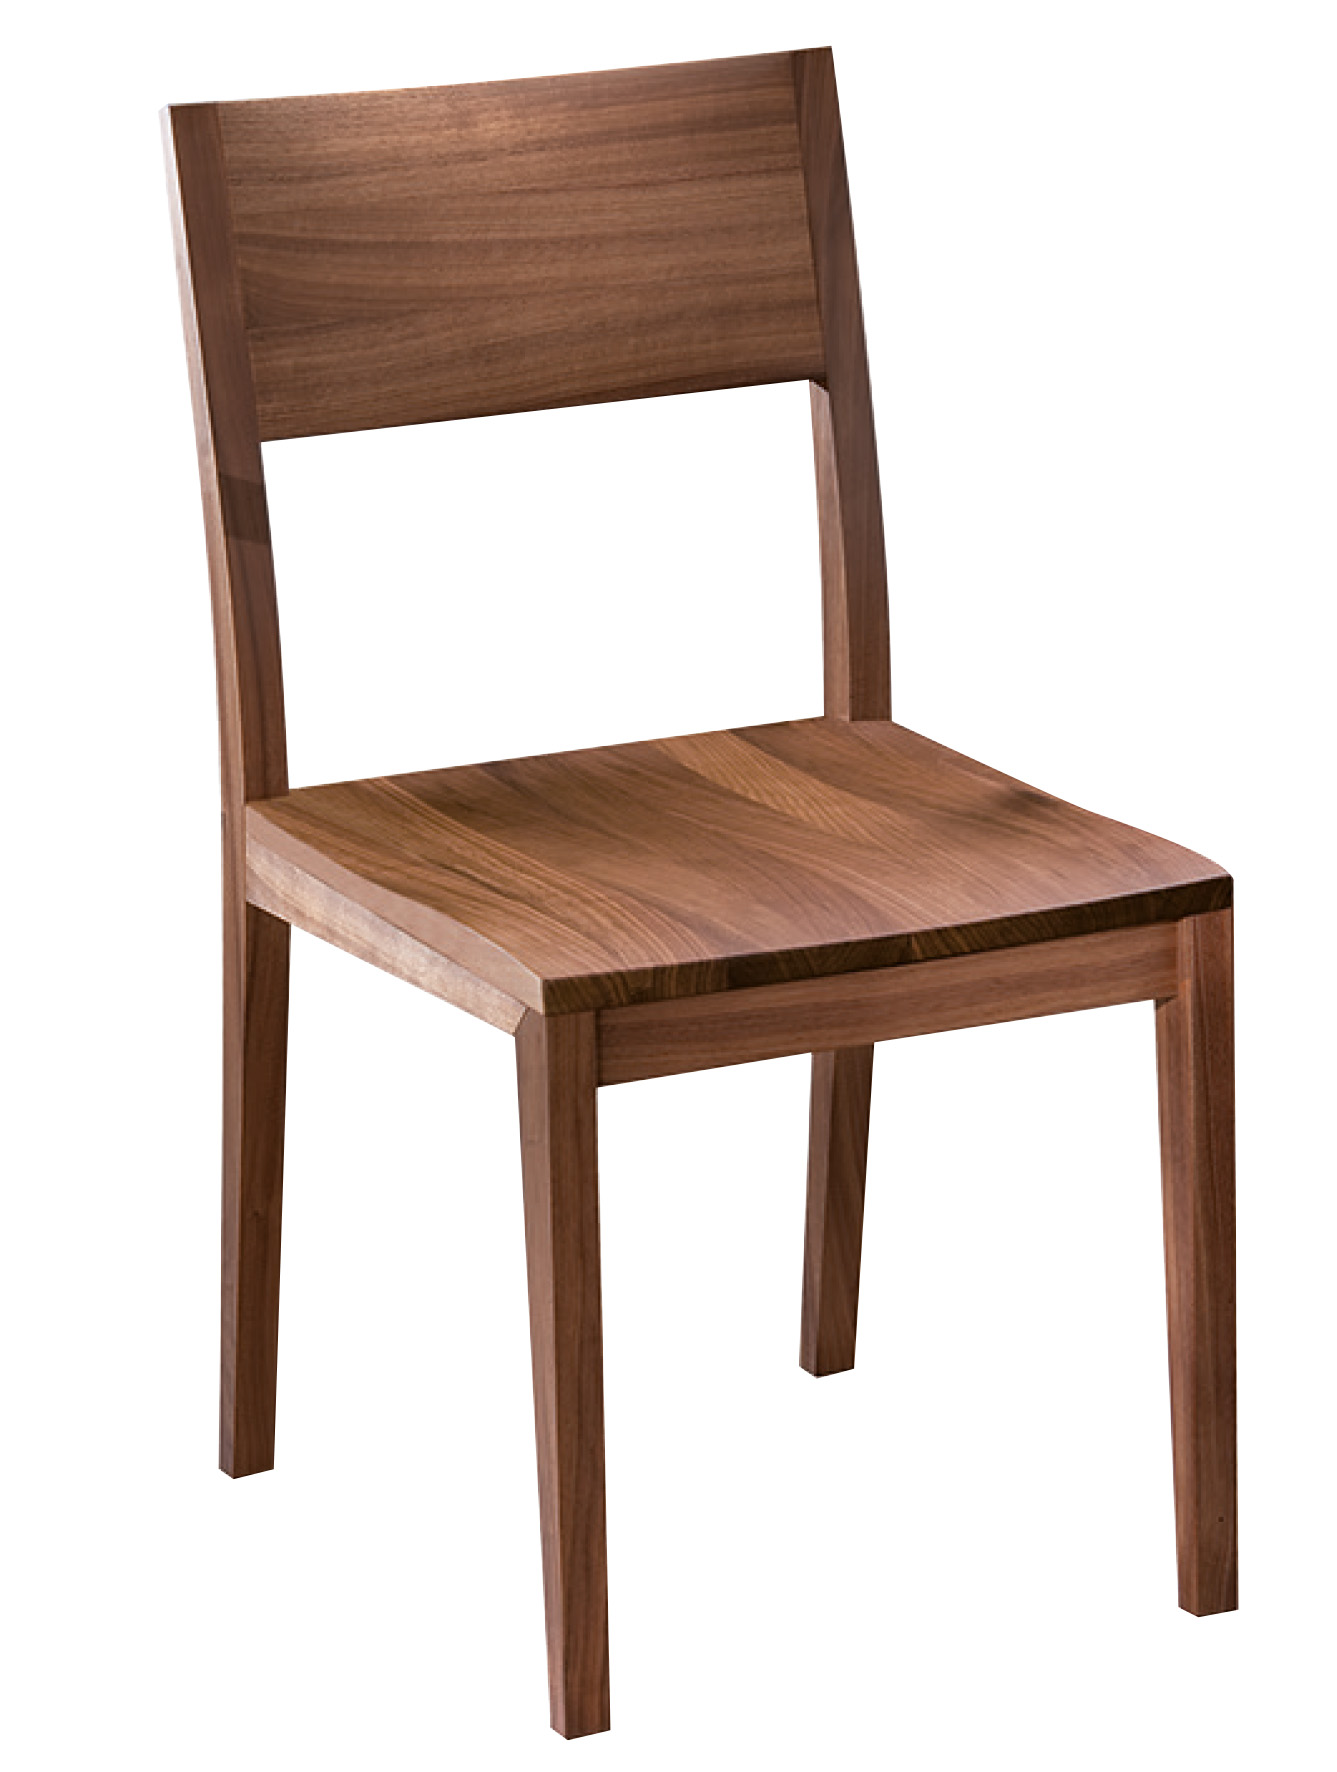 CARESSE TREND Stuhl mit körpergerecht ausgeformtem Holzsitz